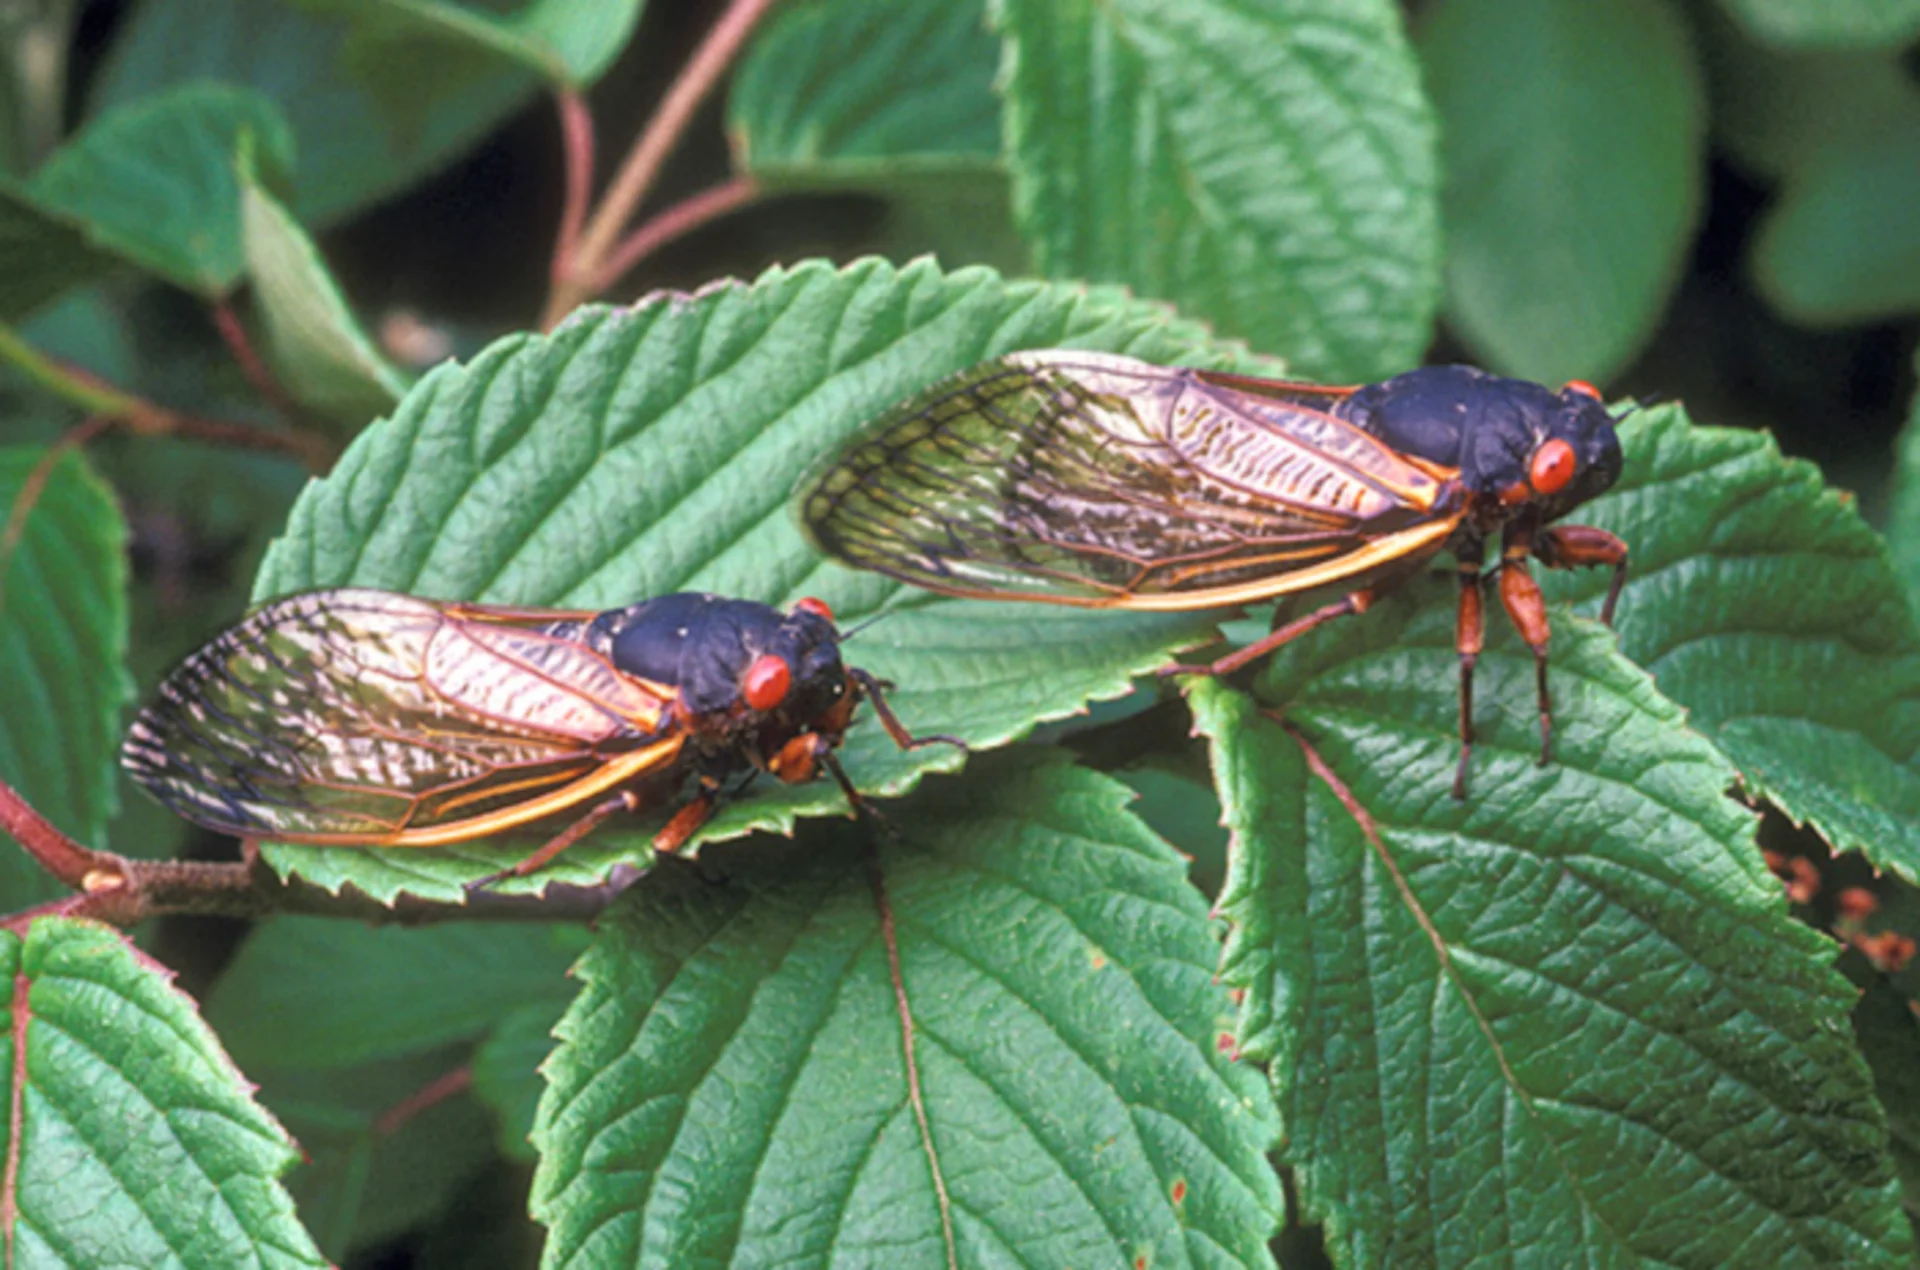 Hot cicada summer: Billions of bugs set to emerge from underground